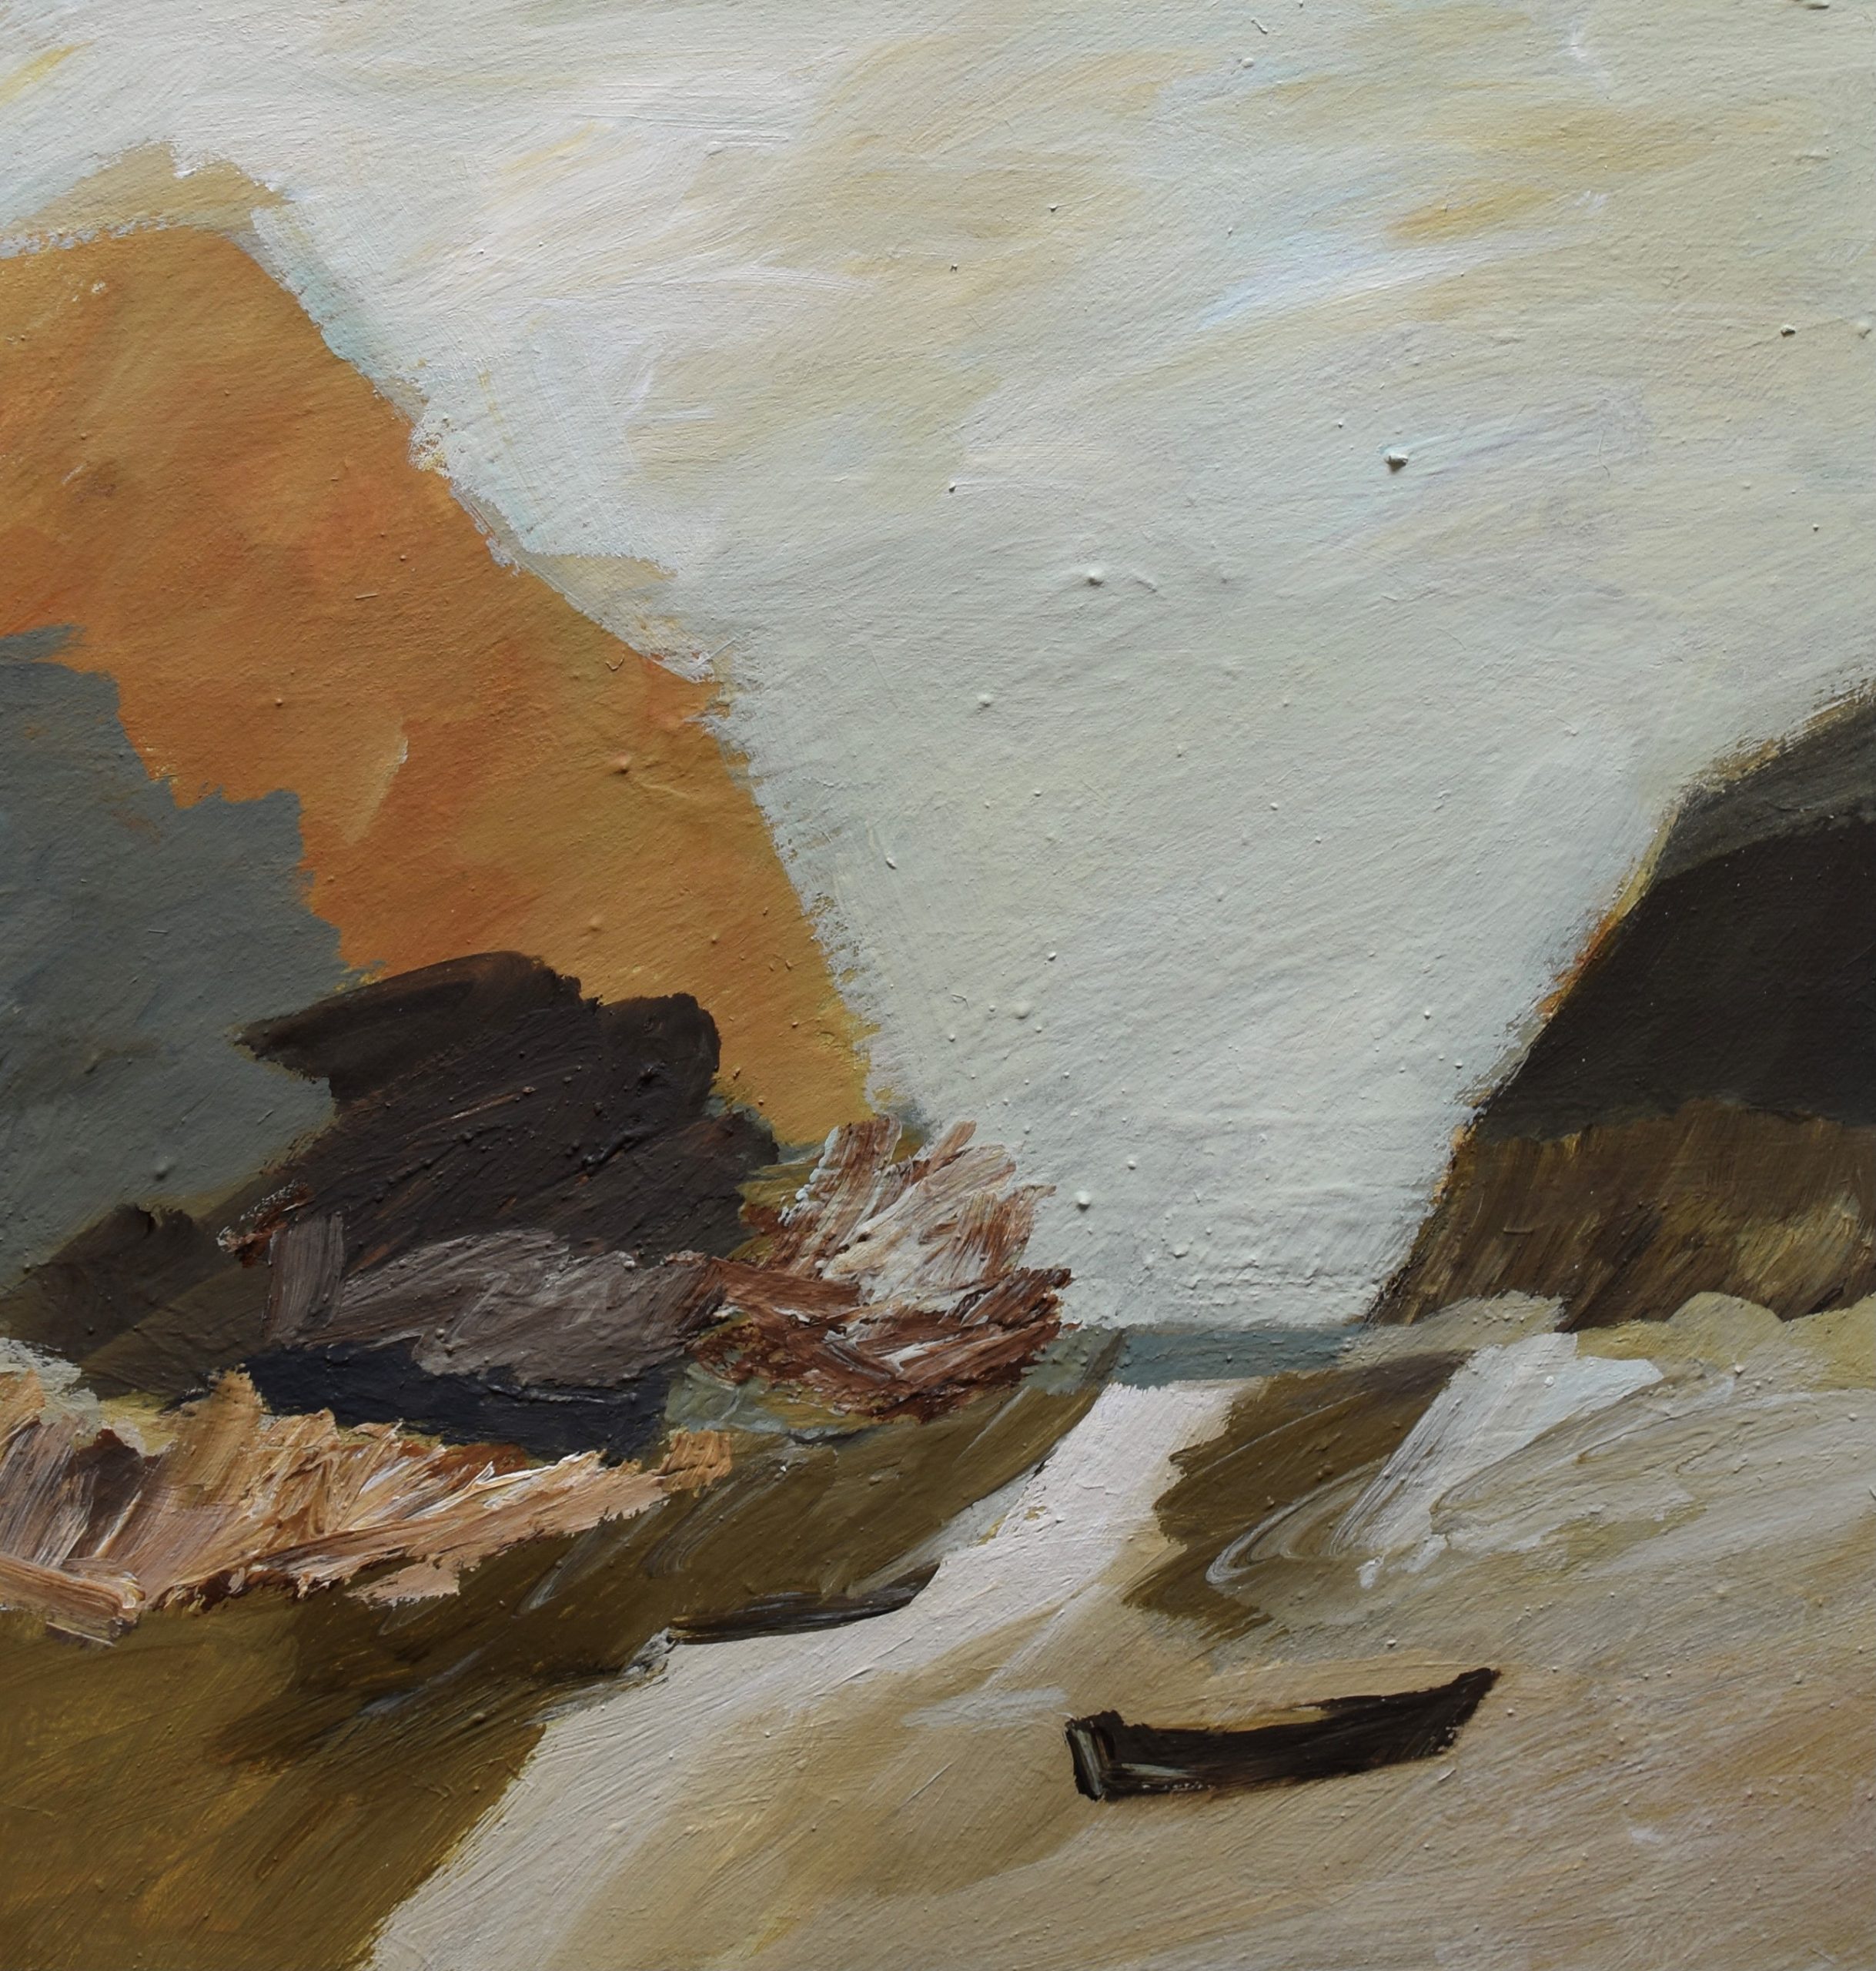 Eleanor Millard 'Watching for the Tide' acrylic on linen 57 x 54cm $4,000